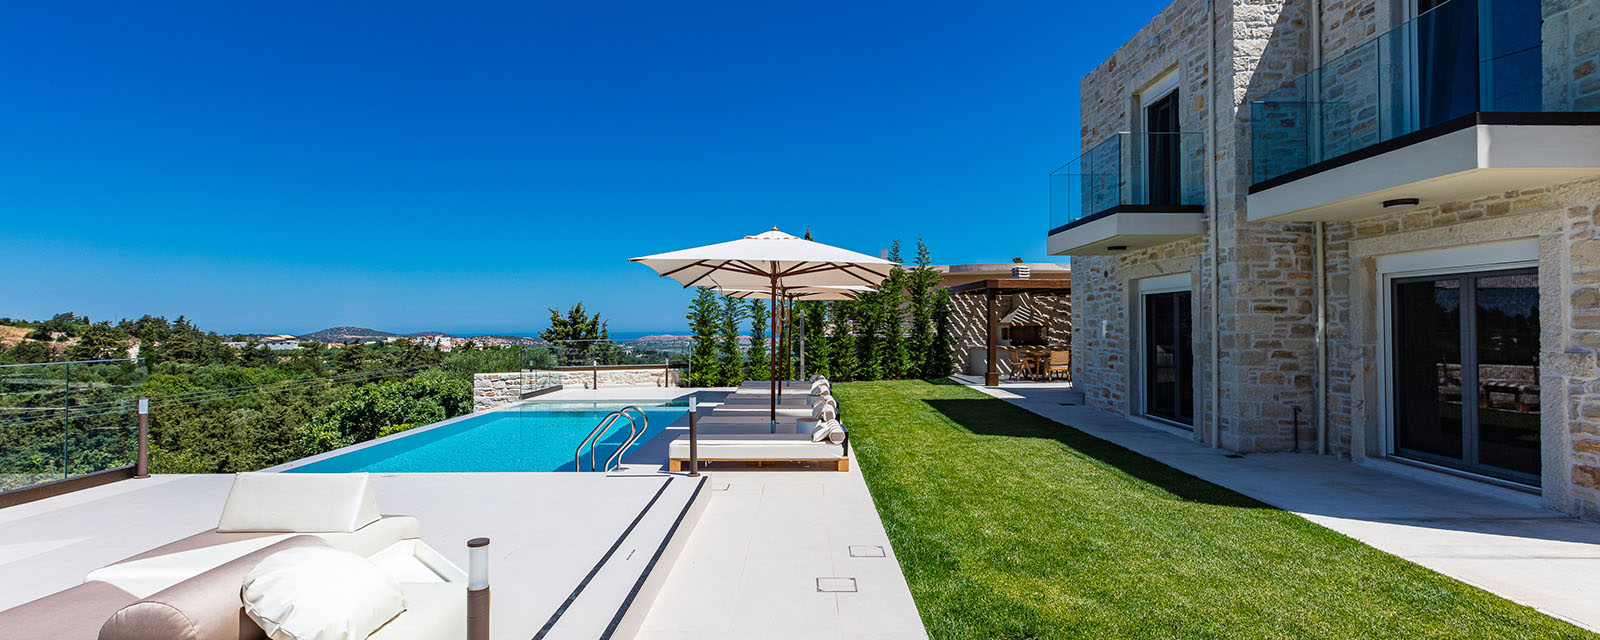 Ferienhaus Auf Kreta Mieten Aceso Villa 1